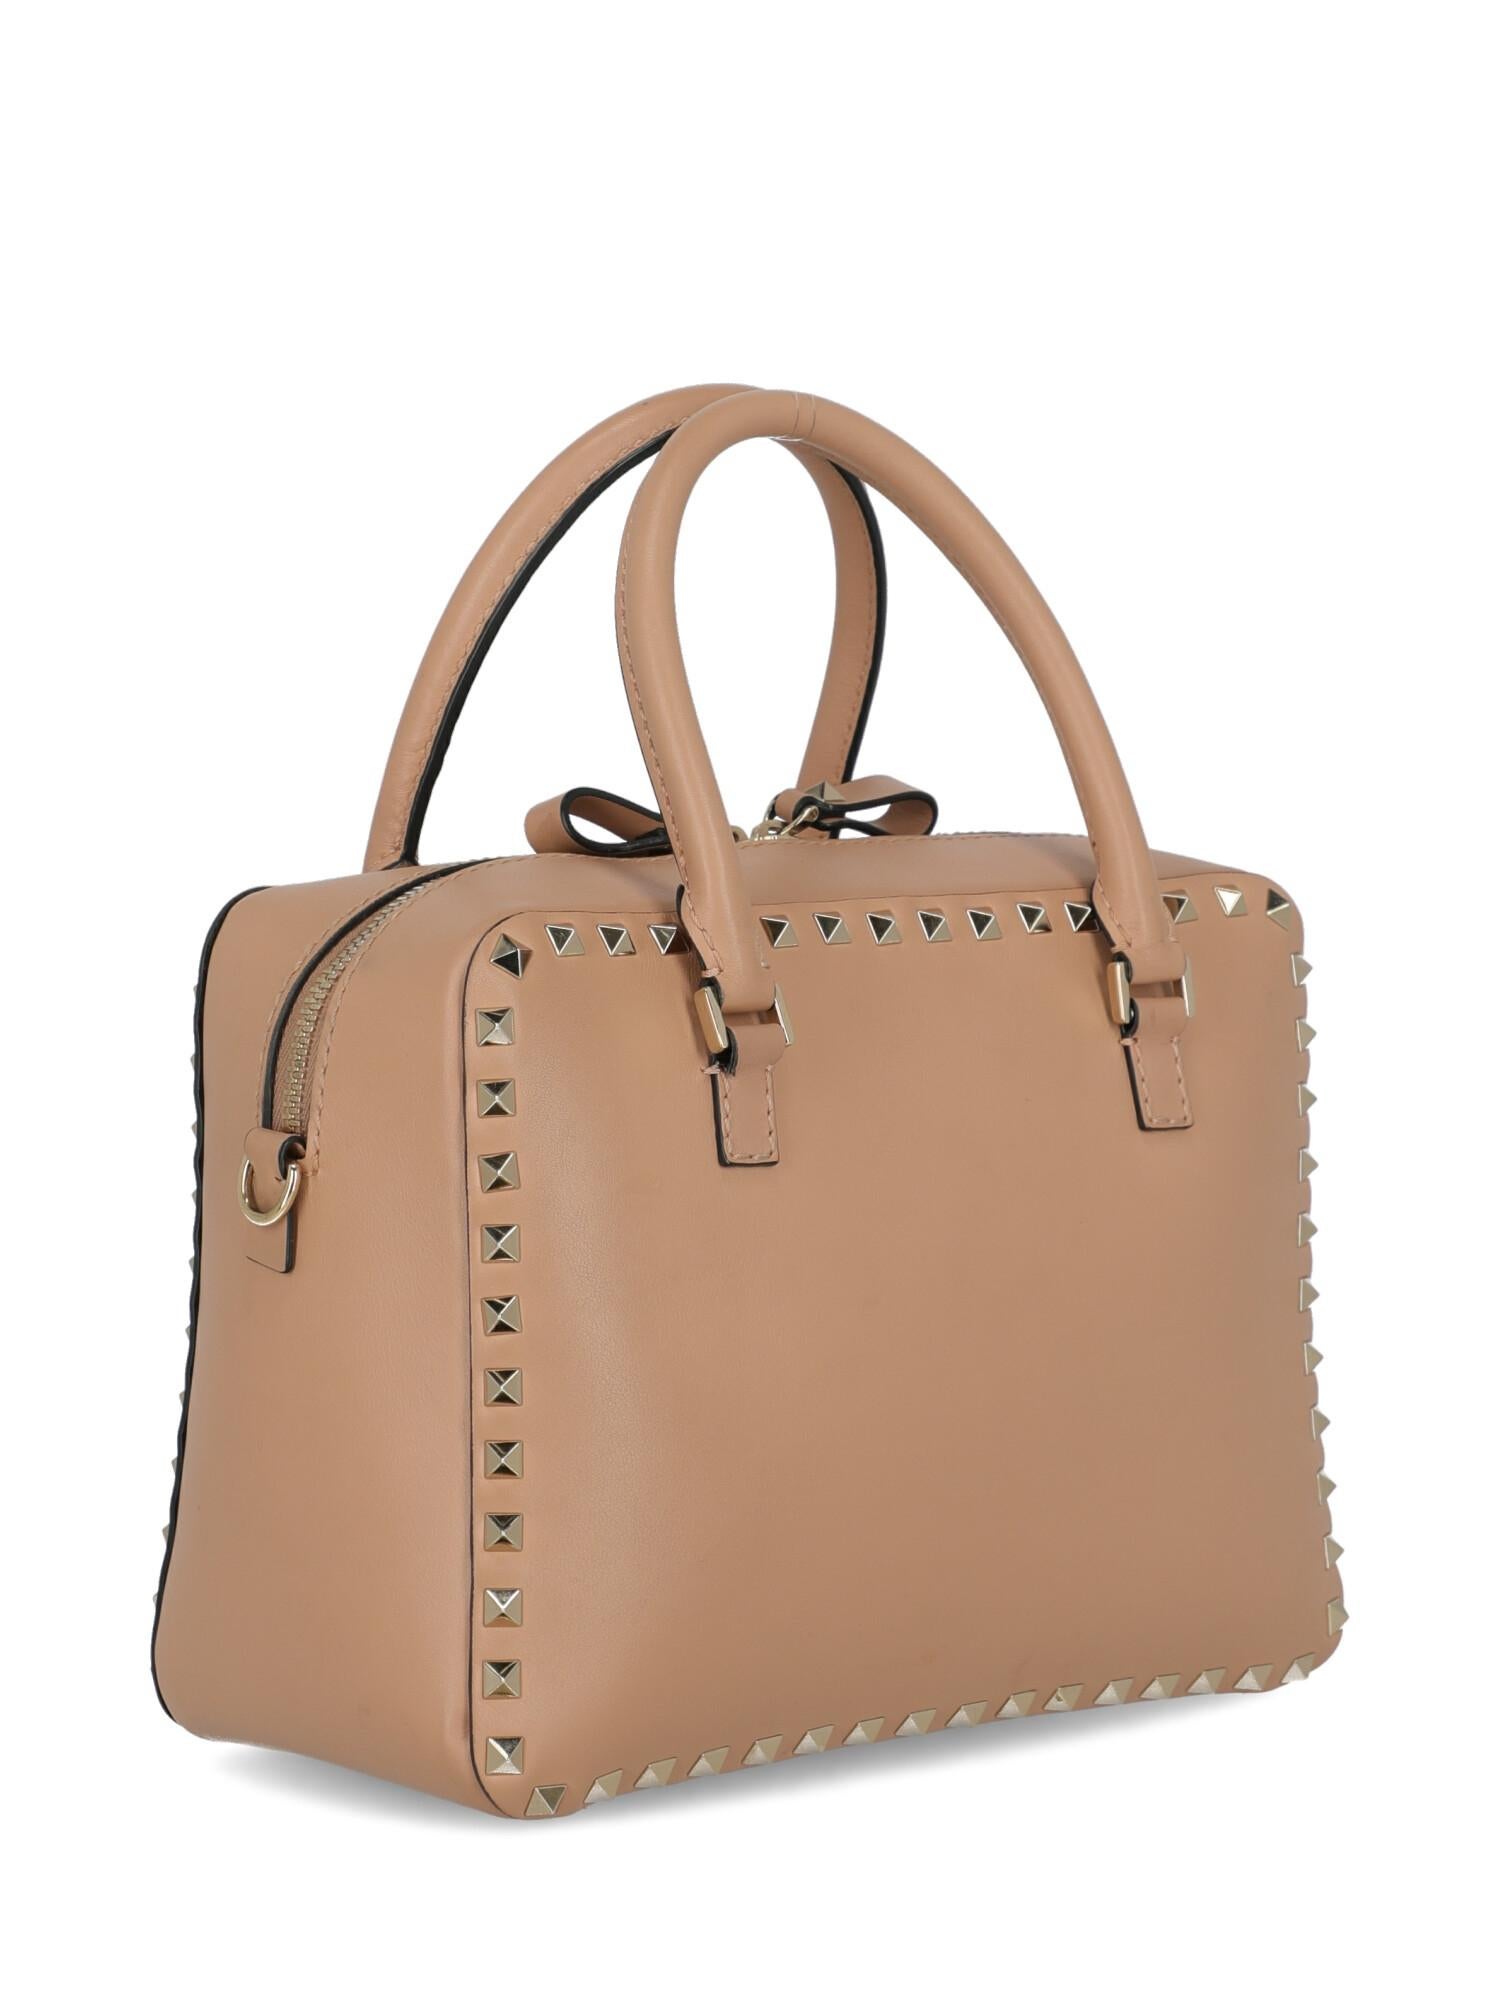 Brown Valentino Woman Handbag Pink Leather For Sale